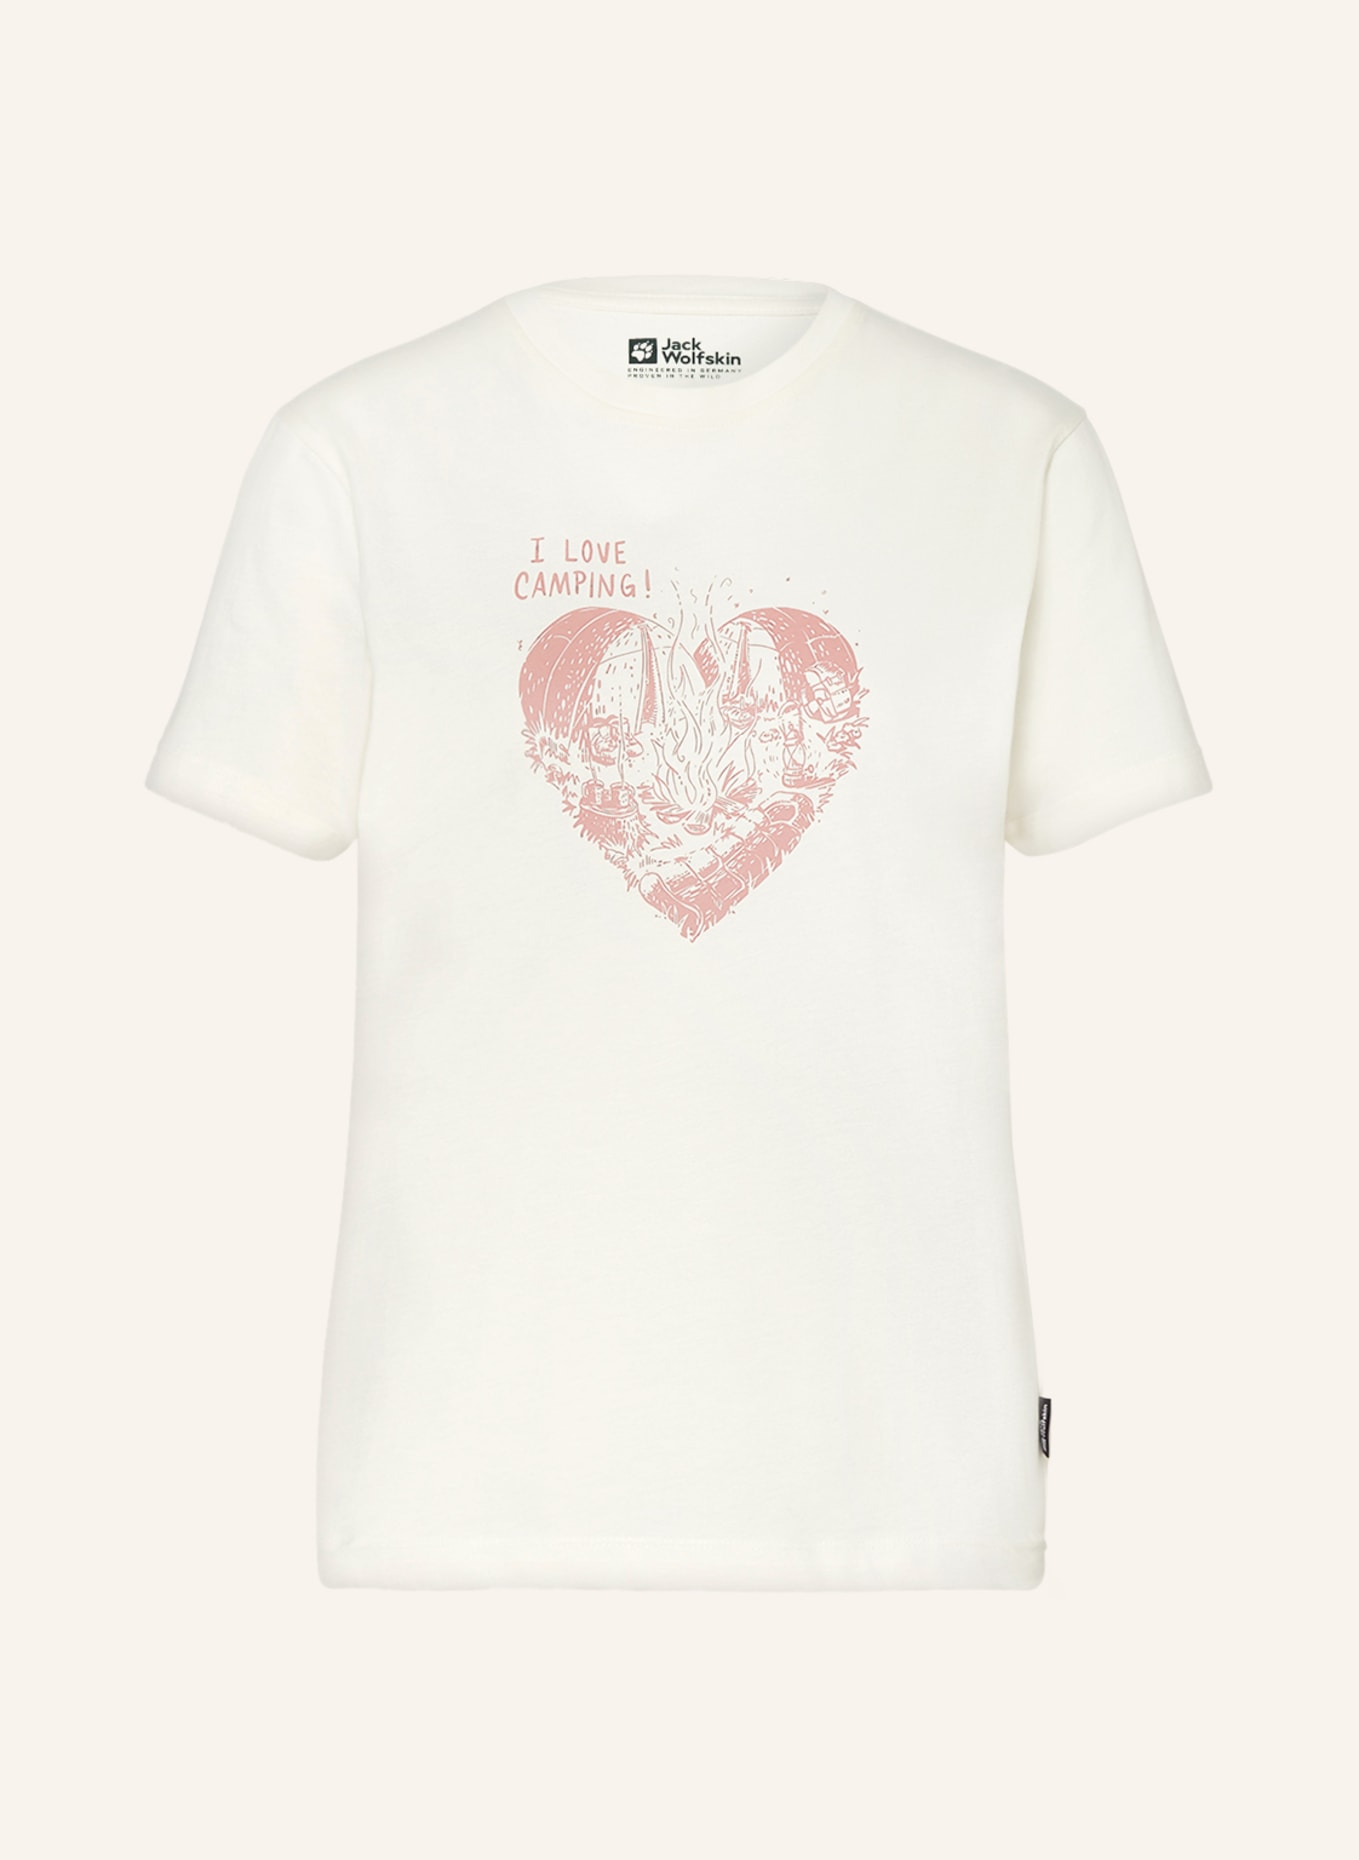 Jack Wolfskin T-Shirt CAMPING LOVE, Farbe: HELLGELB/ ALTROSA (Bild 1)